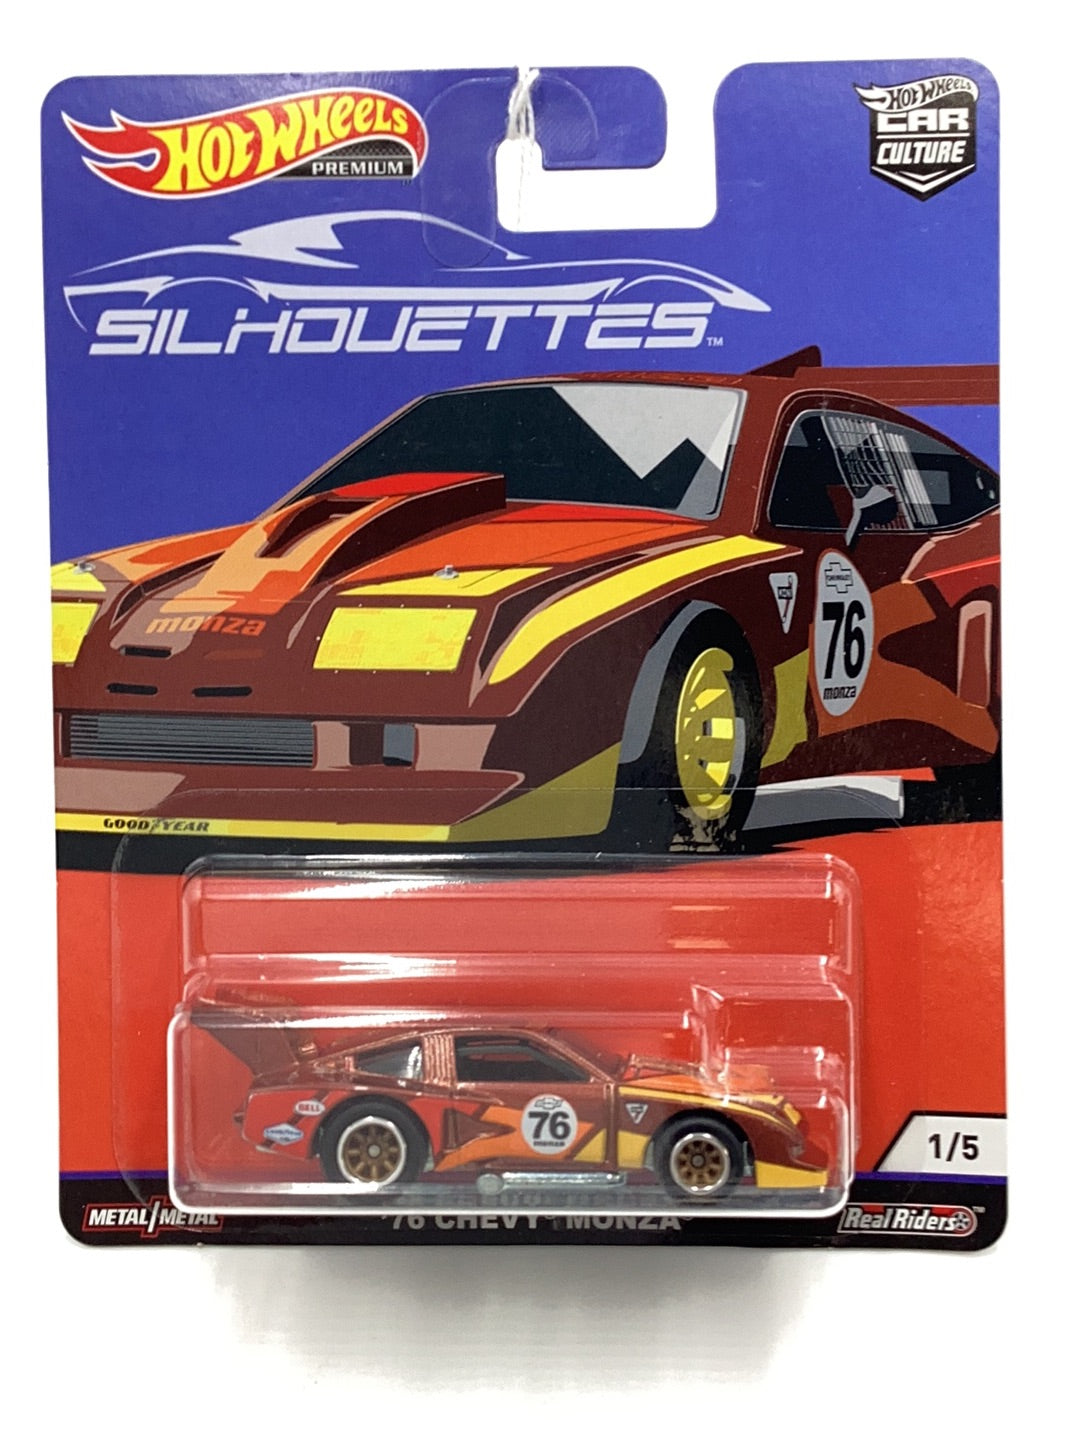 Hot wheels car culture silhouettes #1 76 Chevy Monza